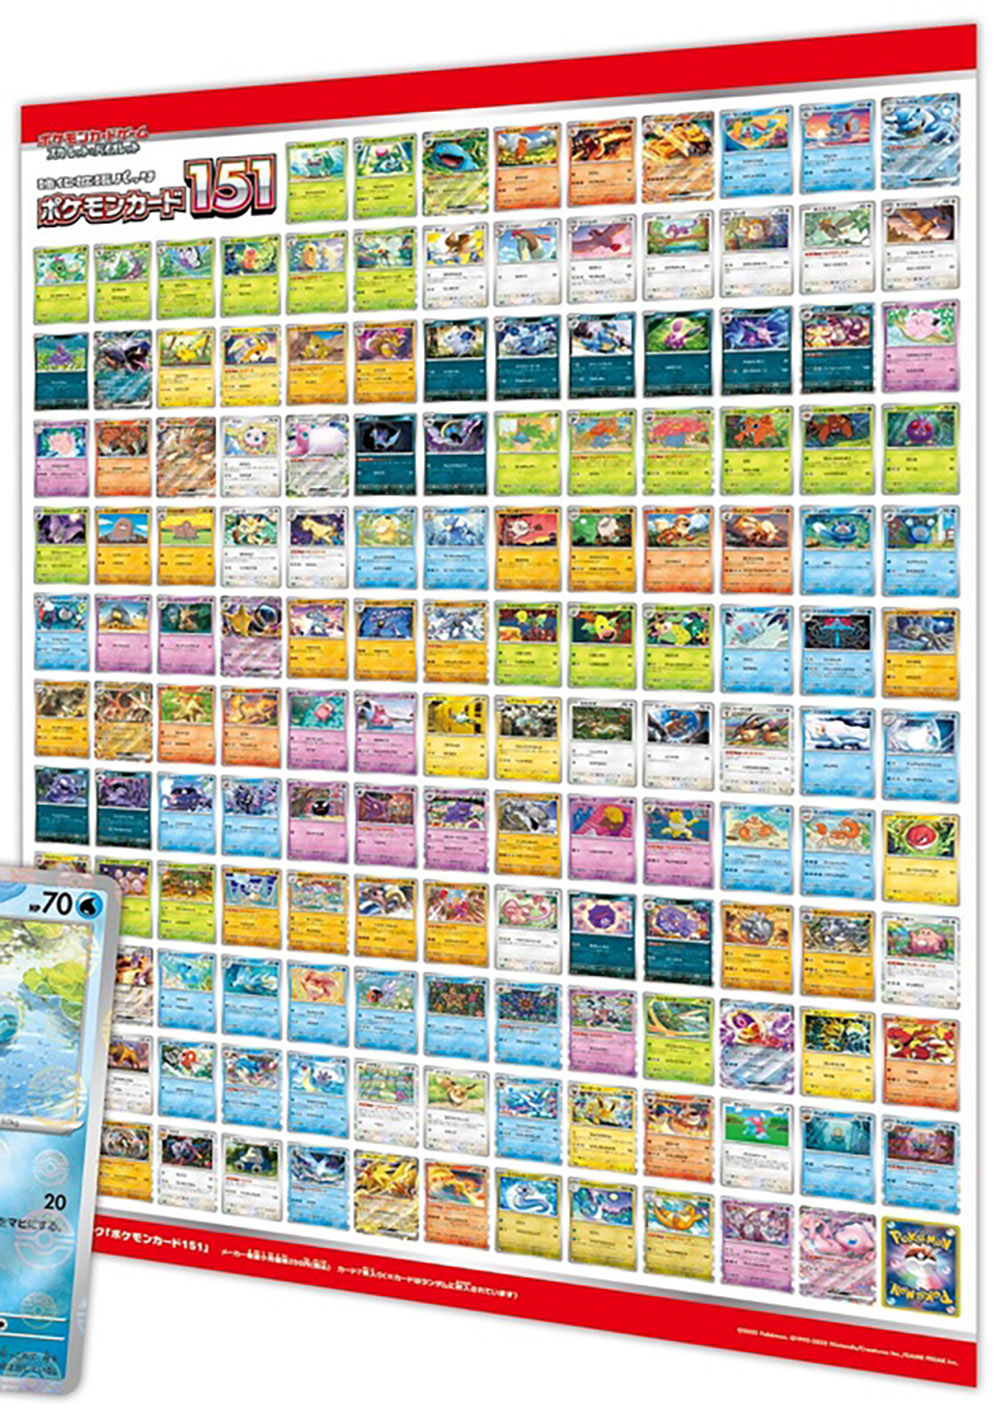 Pokemon 151 Pokemon Card Set List